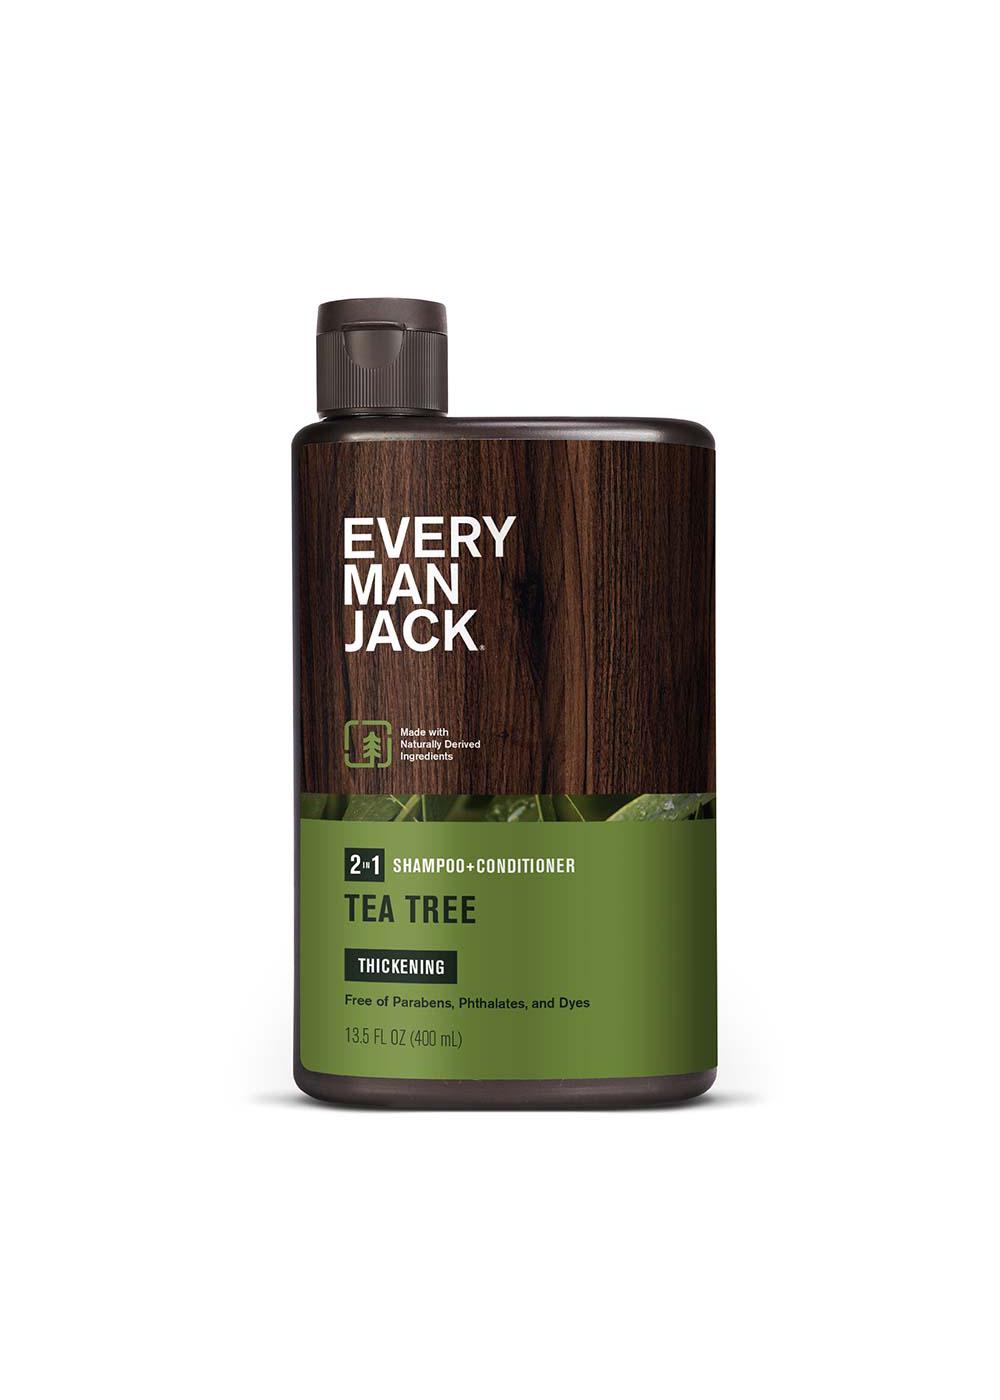 Every Man Jack Thickening Shampoo + Conditioner - Tea Tree; image 1 of 2